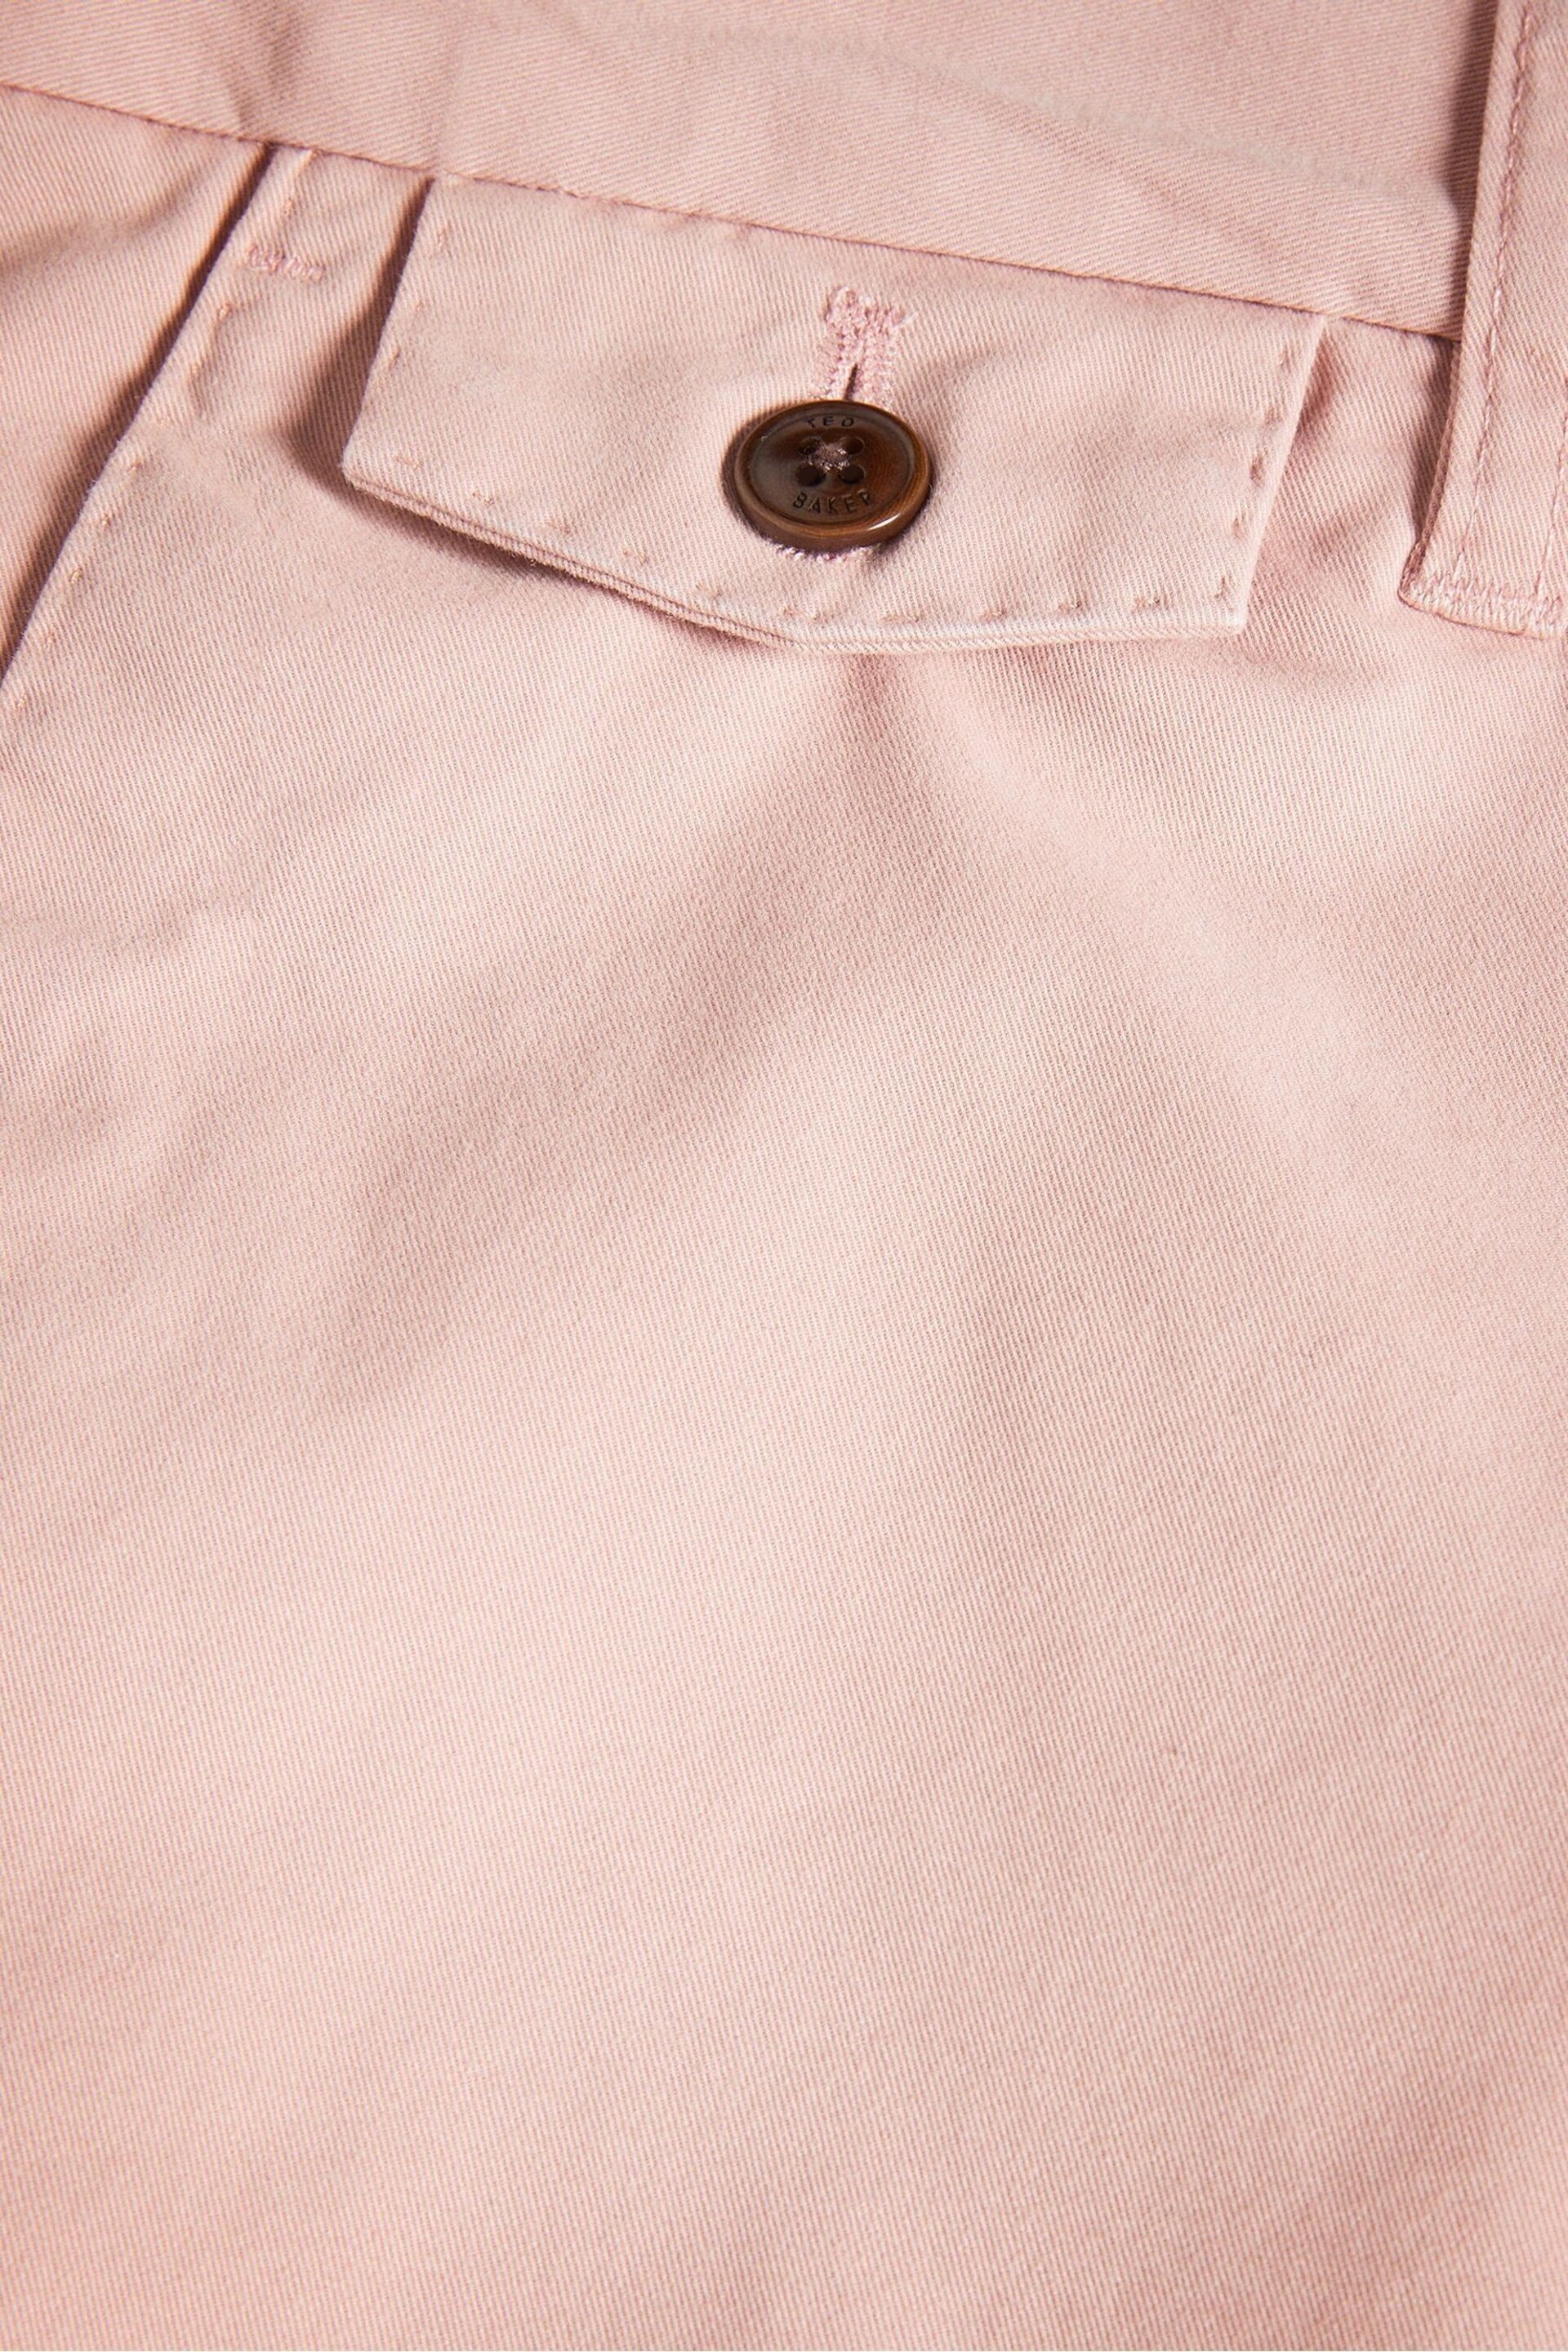 Ted Baker Pink Ashfrd Chino Shorts - Image 5 of 5